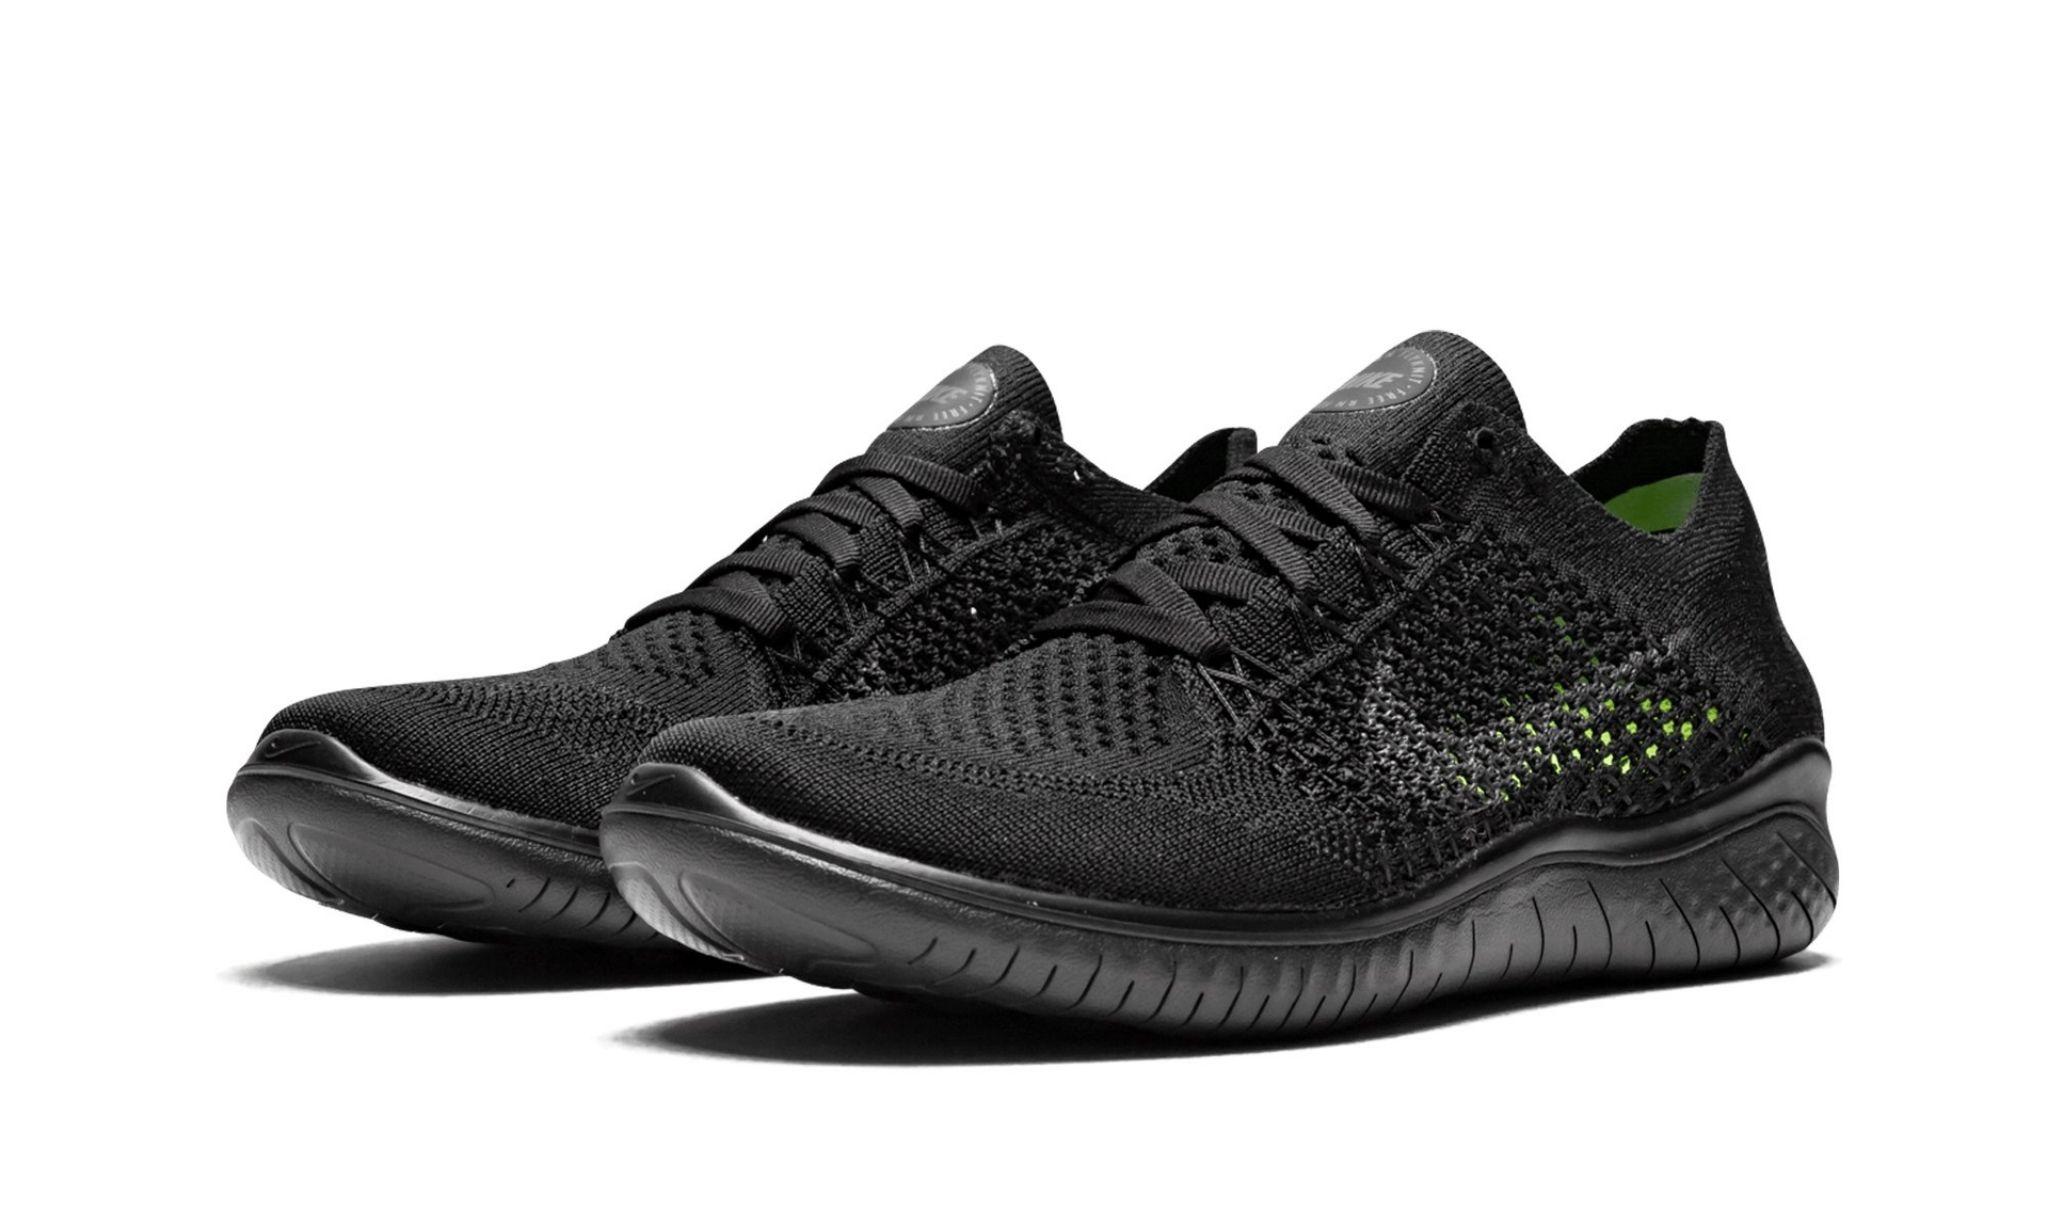 Nike Free Rn Flyknit 2018 Running Shoes in Black | Lyst UK